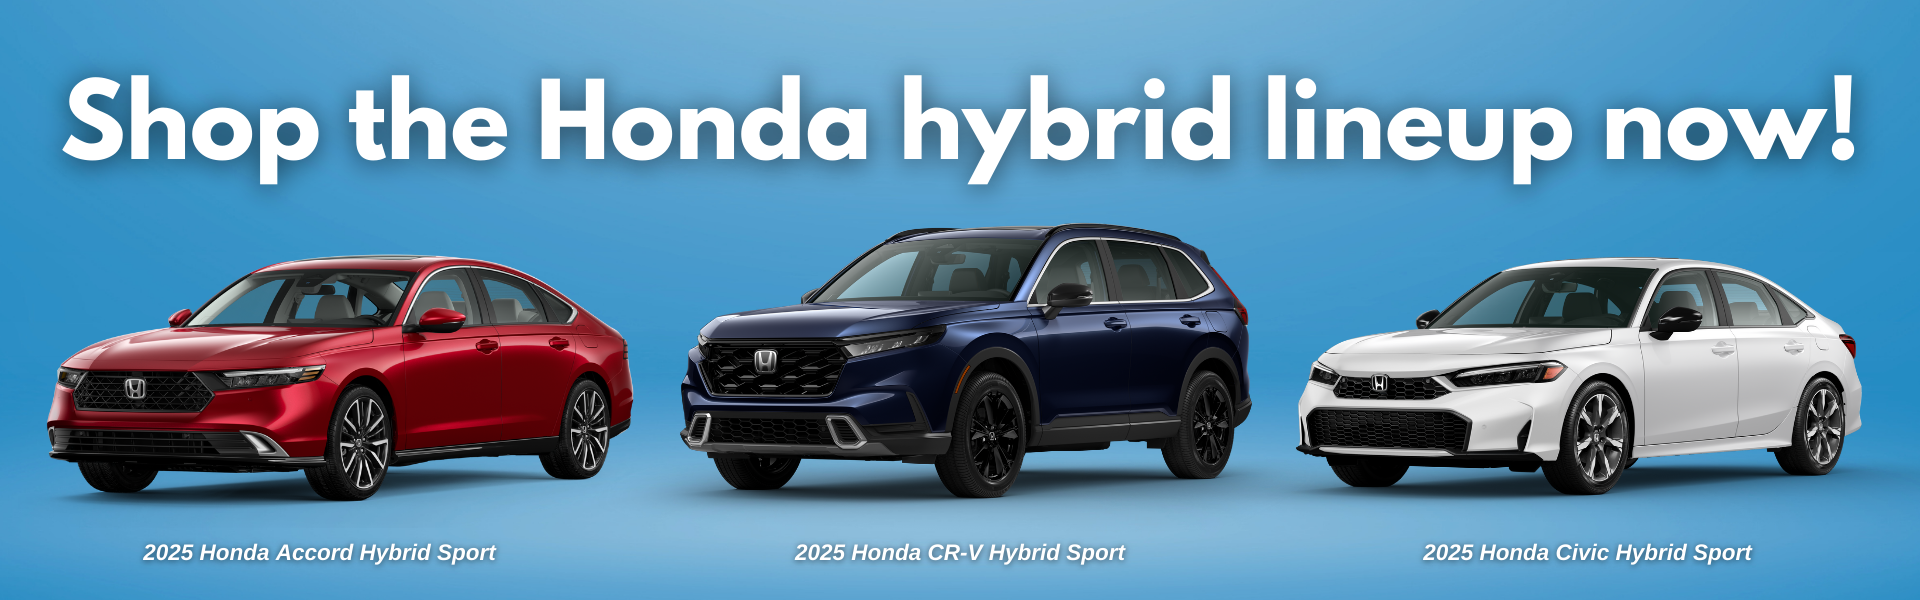 Shop the Honda hybrid lineup now